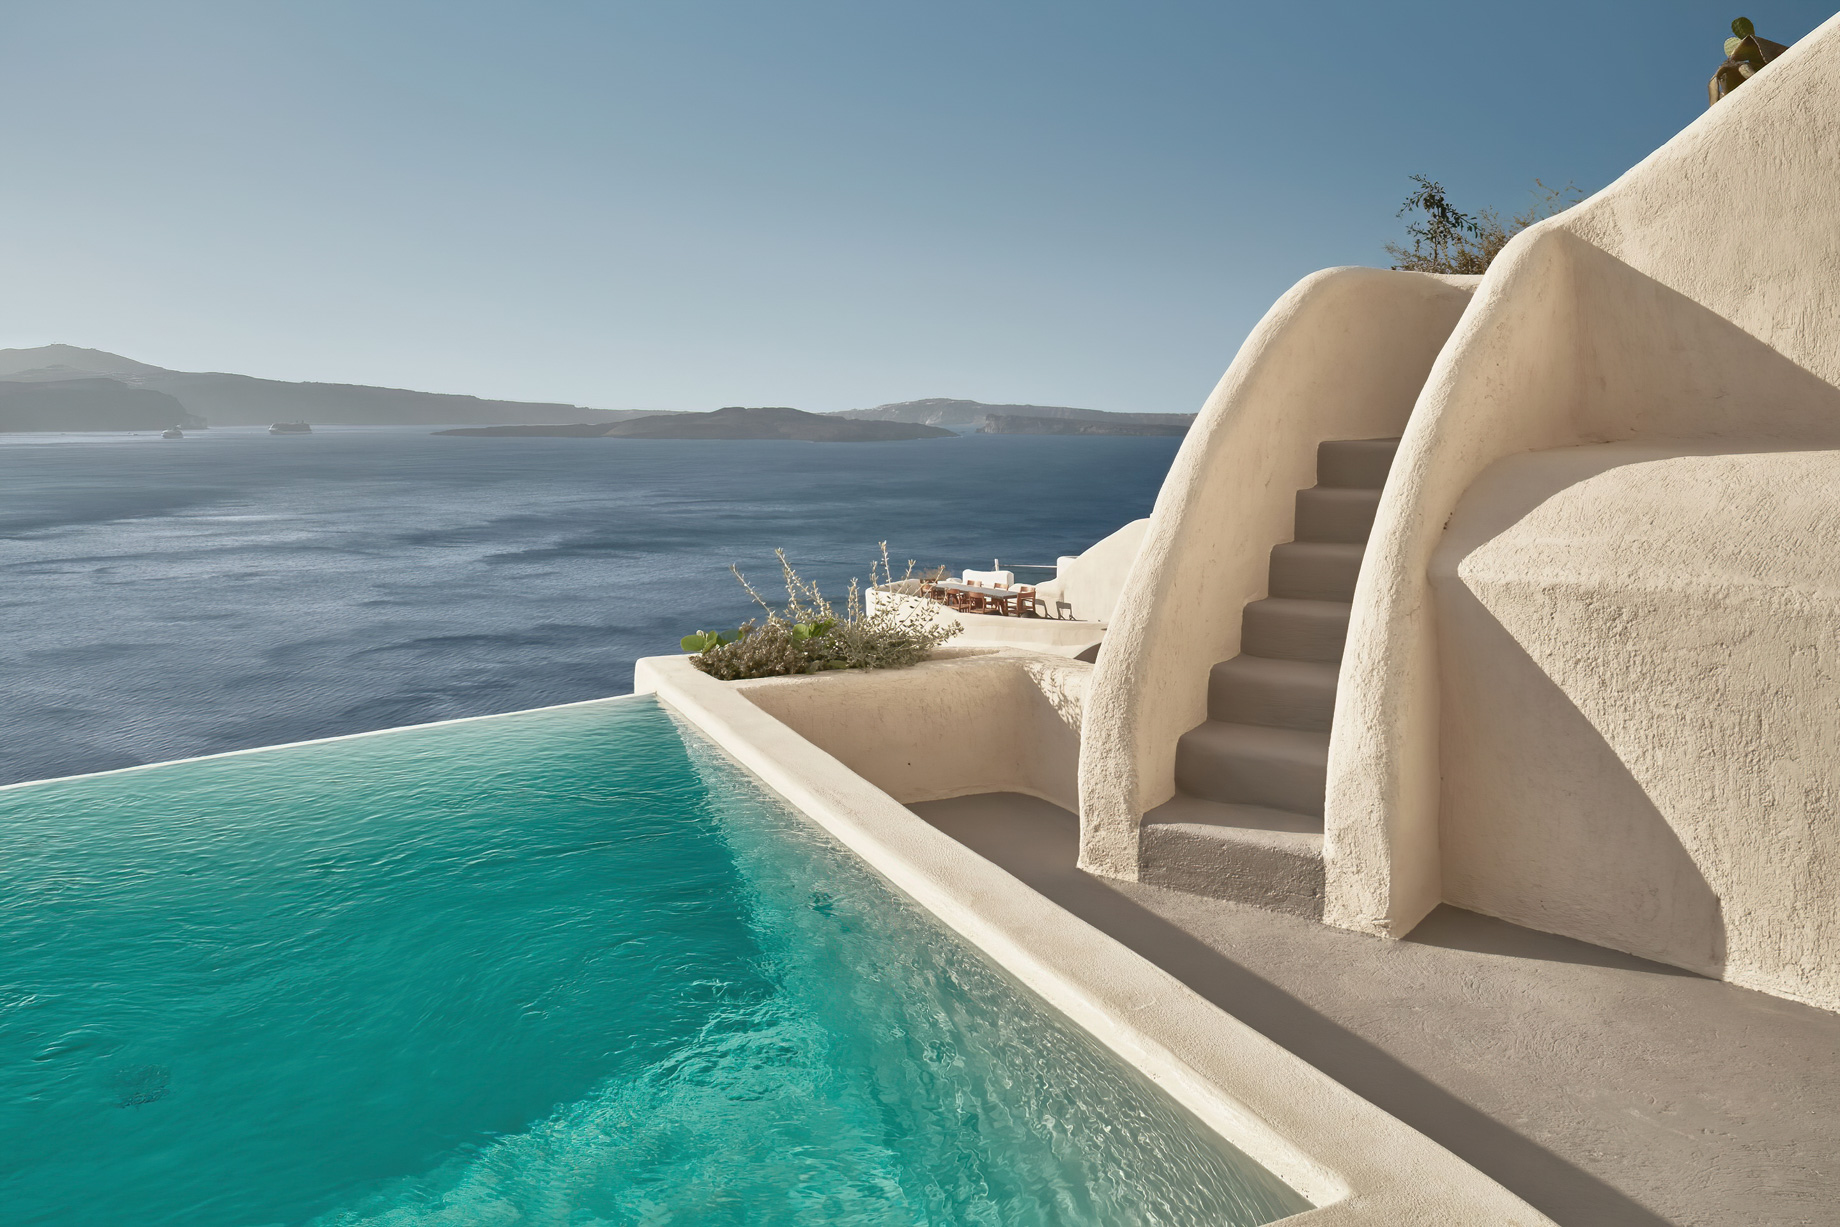 Mystique Hotel Santorini – Oia, Santorini Island, Greece – Holistic Villa Infinity Pool View